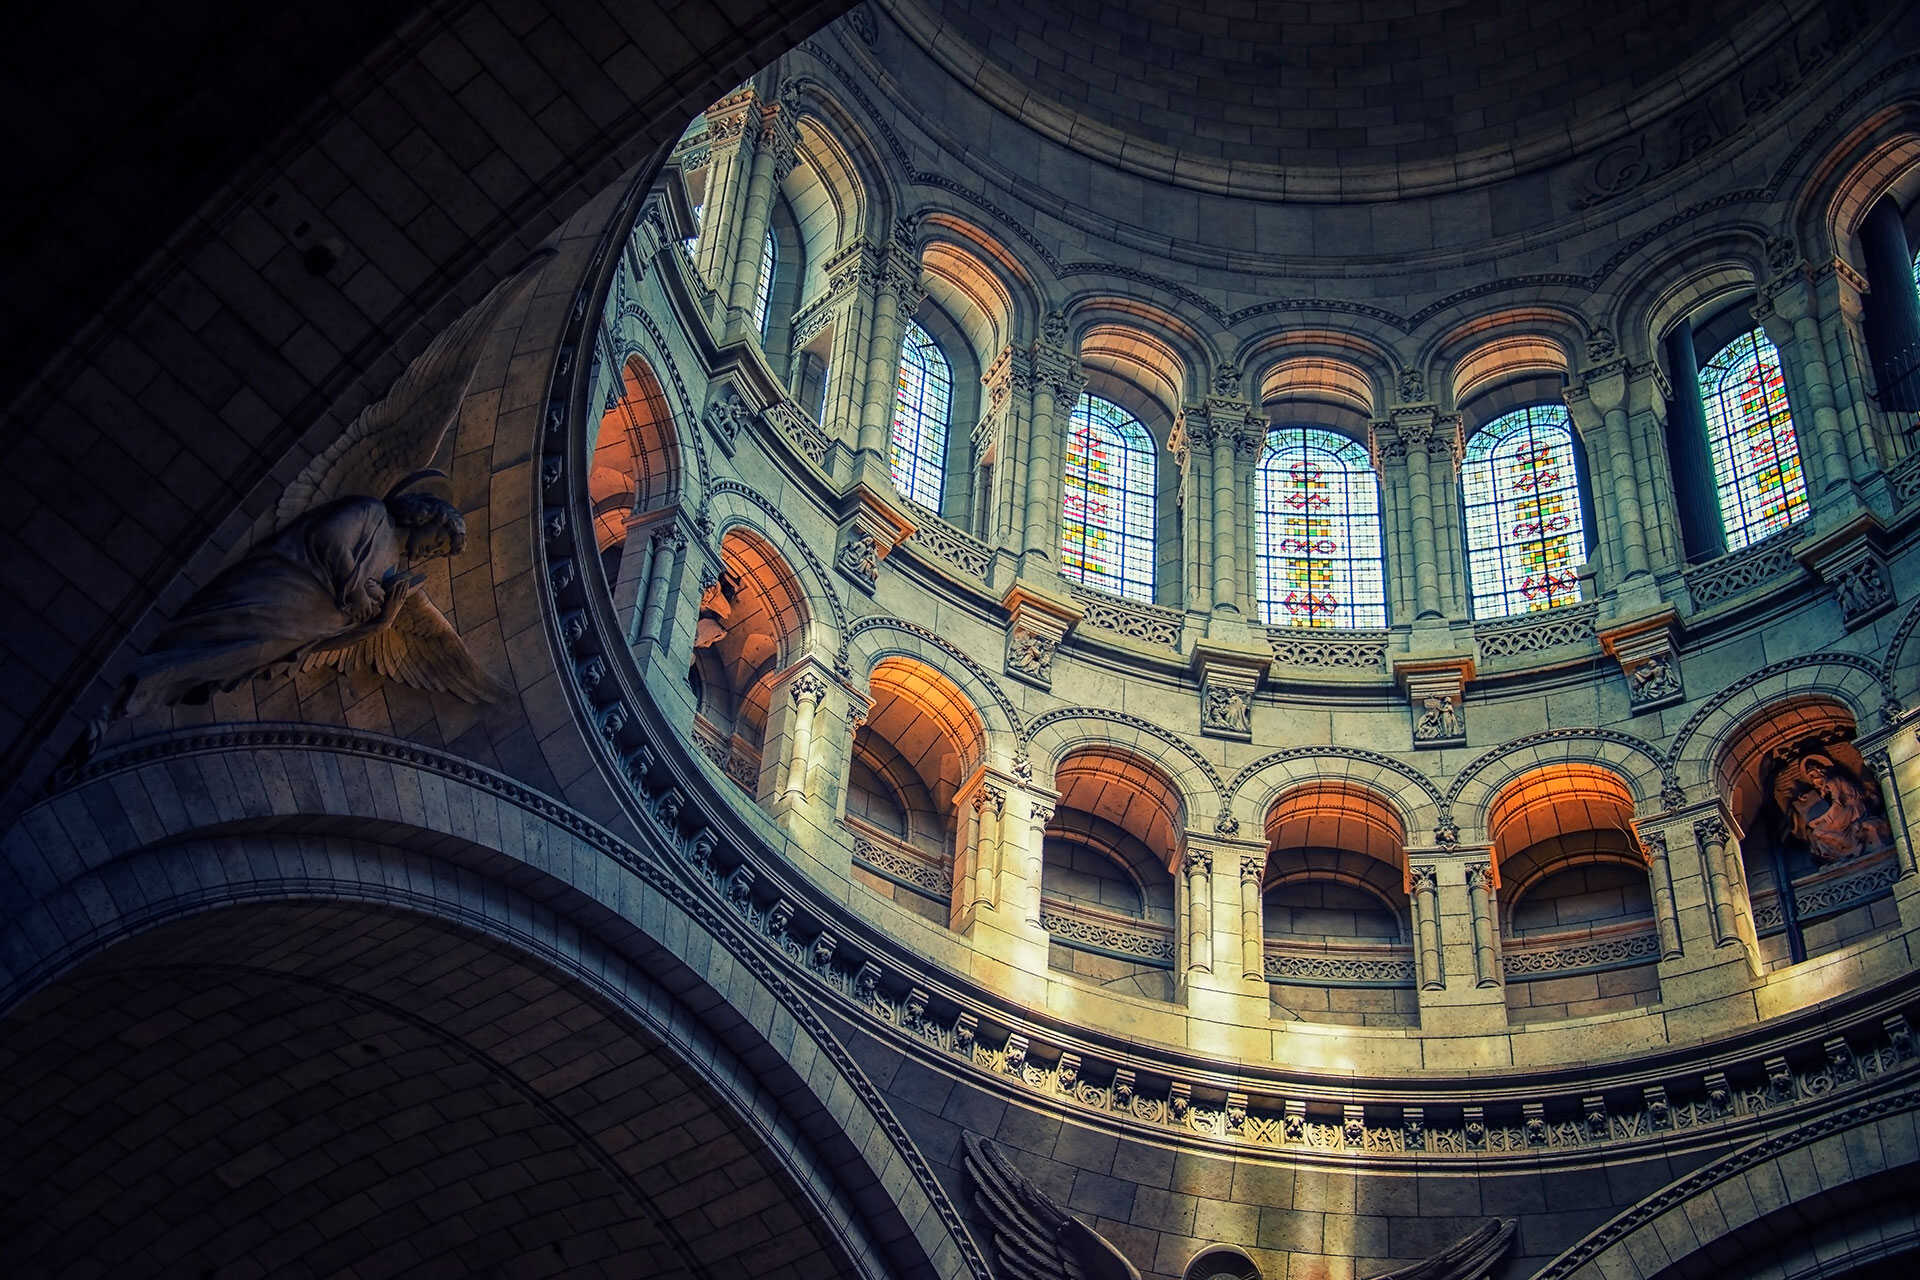 sacre coeur basilica, stained glass windows